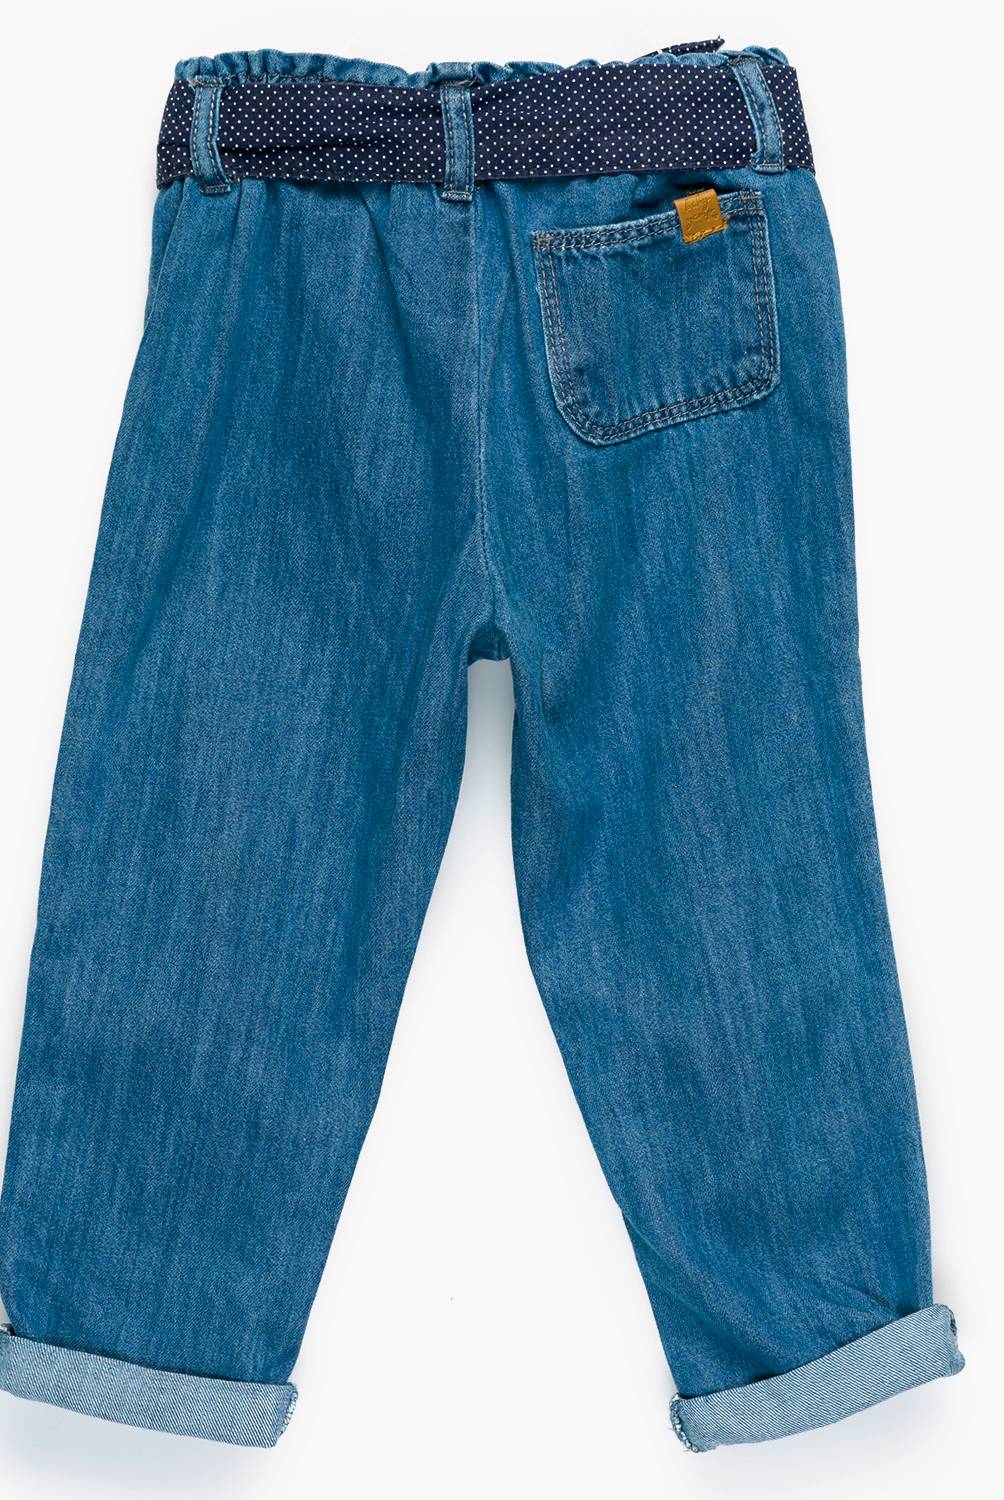 YAMP - Jeans Cintura Elásticada Algodón Bebé Niña